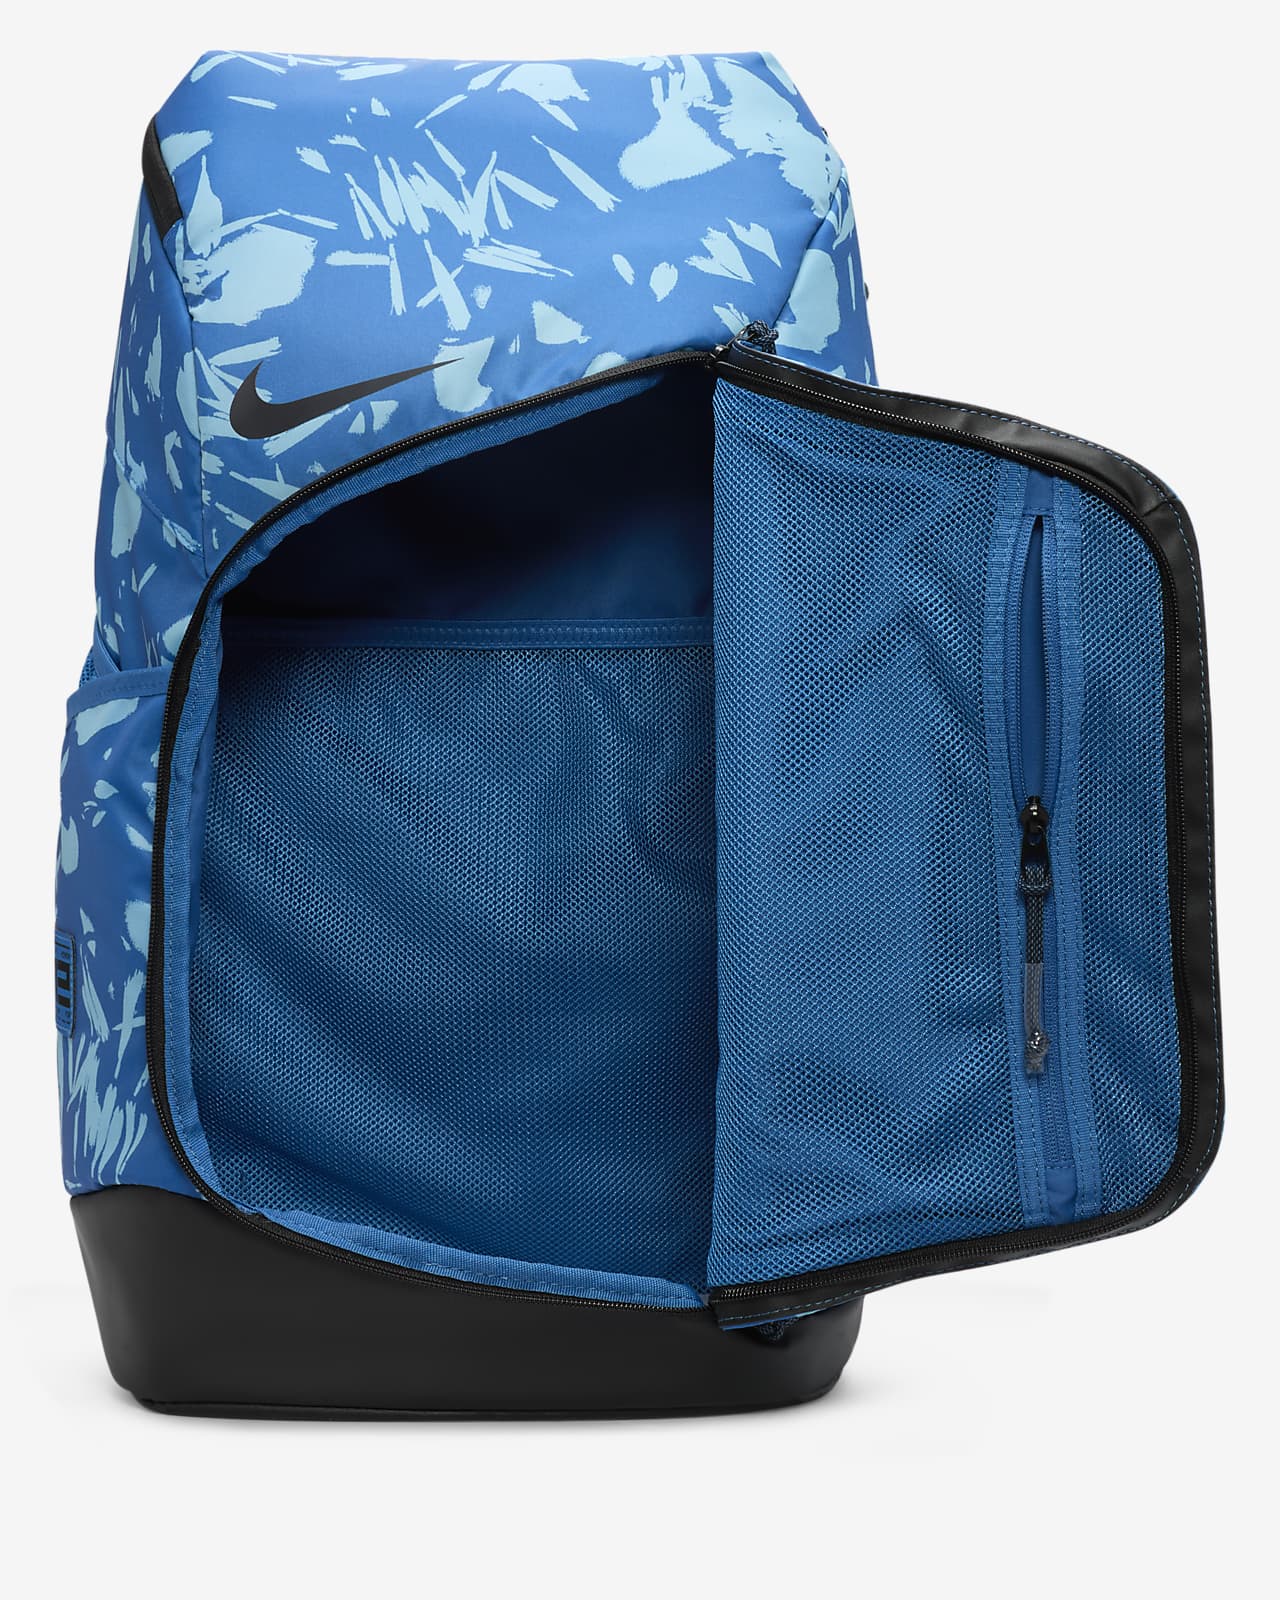 Nike elite backpack : r/FashionReps